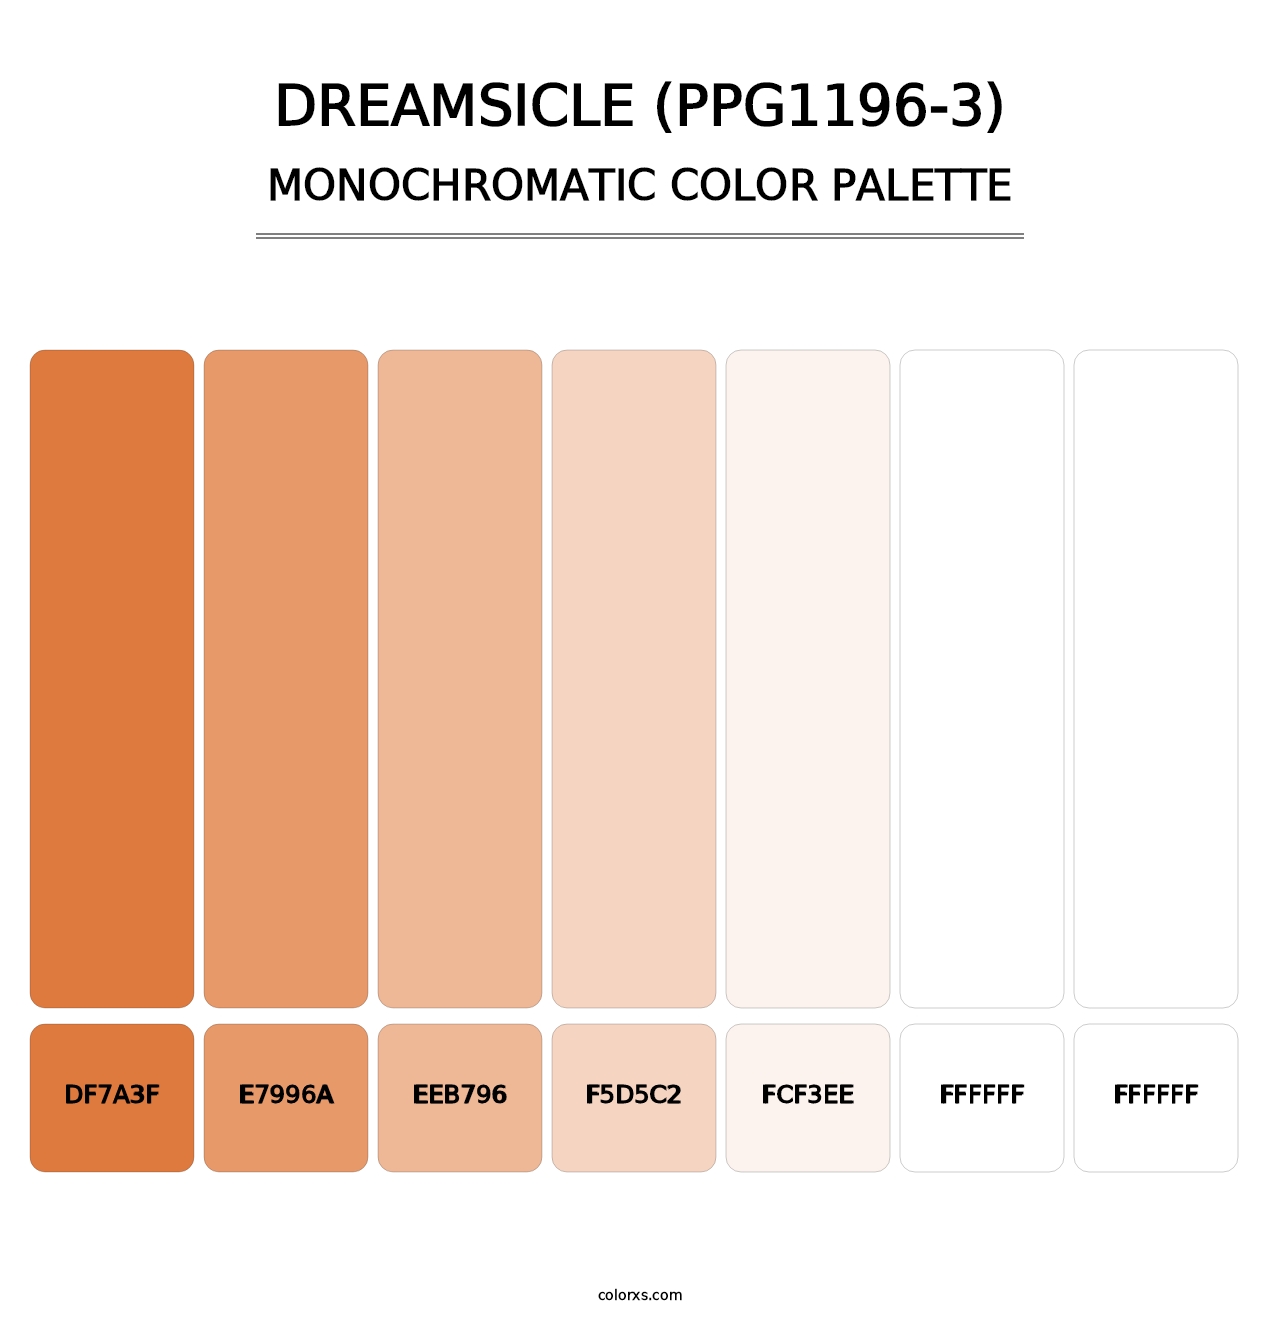 Dreamsicle (PPG1196-3) - Monochromatic Color Palette